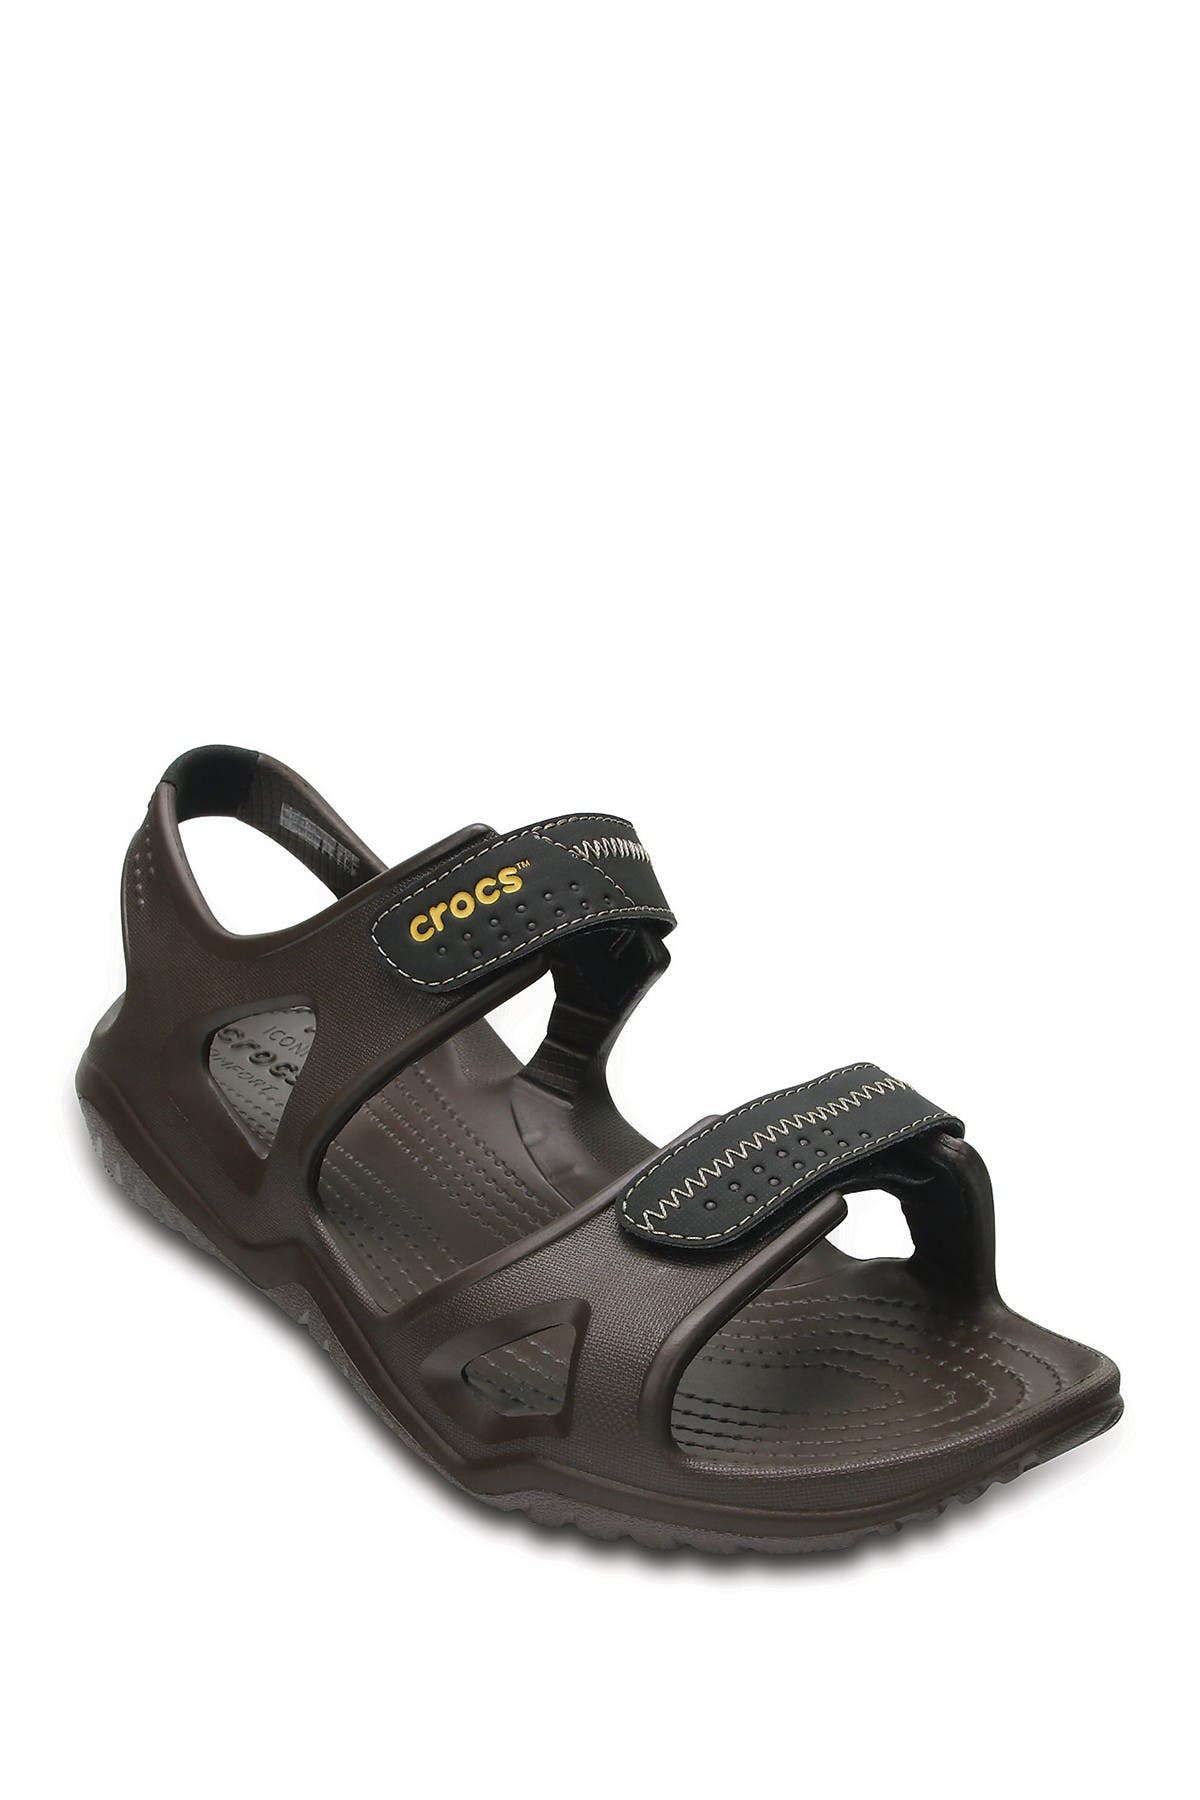 crocs swiftwater river sandals